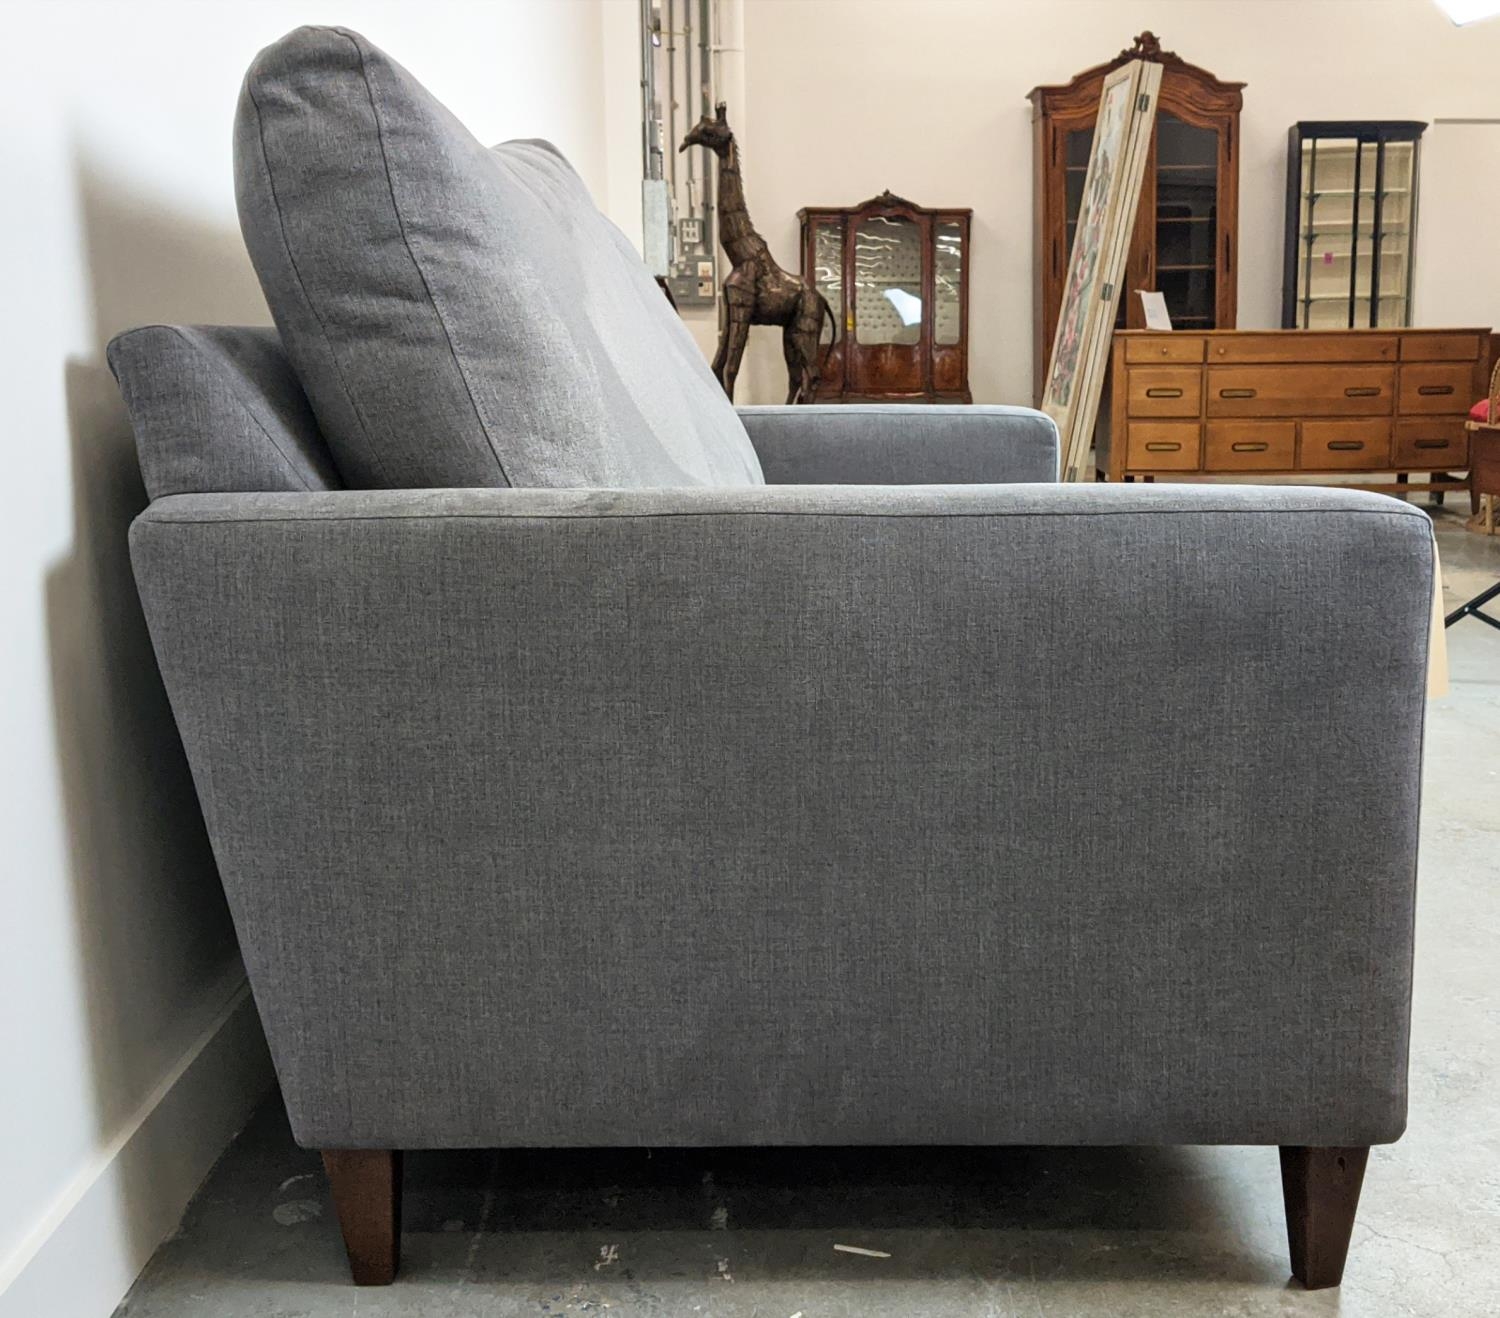 SOFA, grey upholstery, 78cm H x 188cm W. - Image 4 of 8